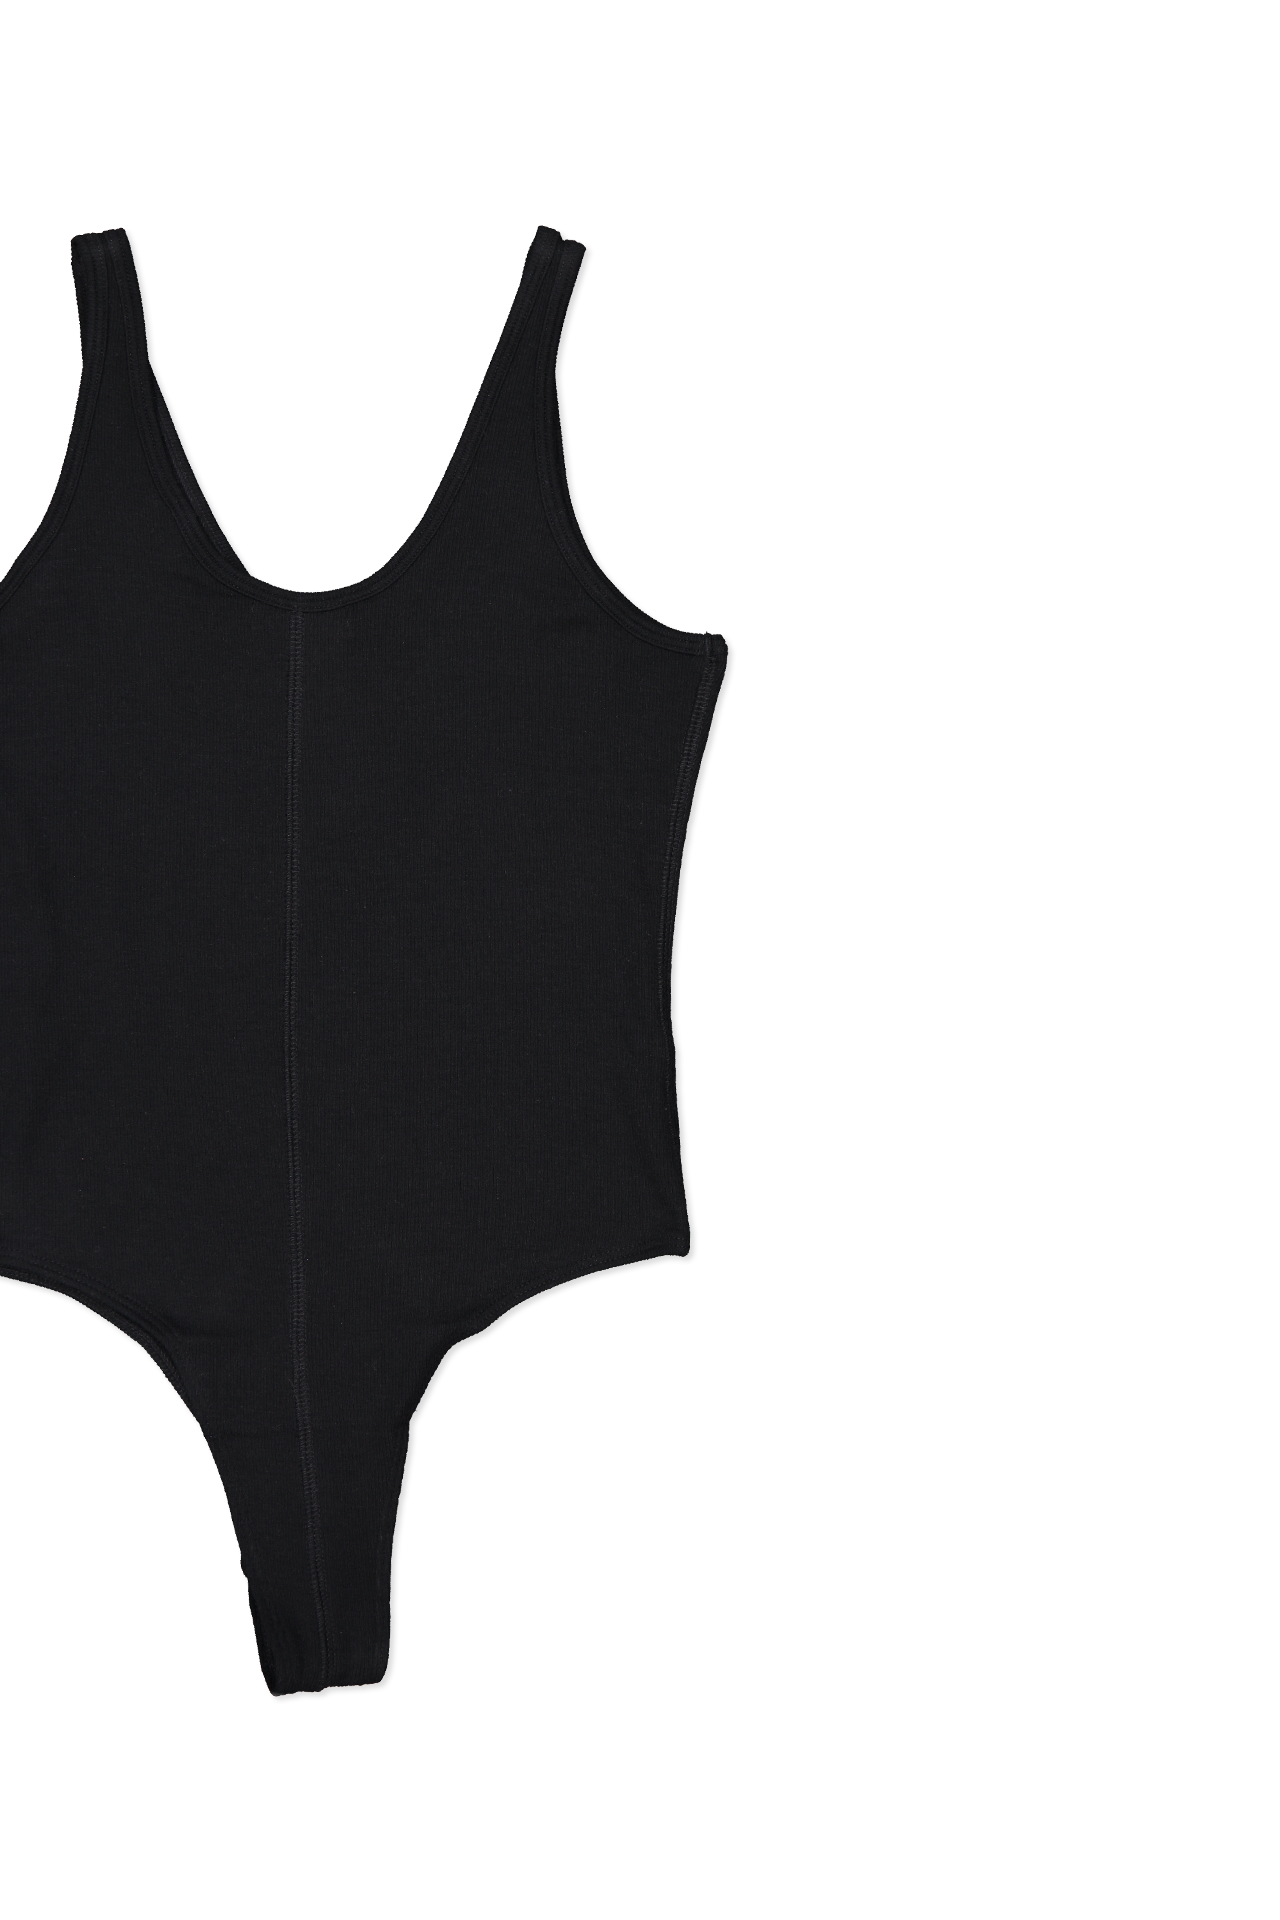 ATM V-Neck Tank Bodysuit Black Back Flat Image (6616001937523)